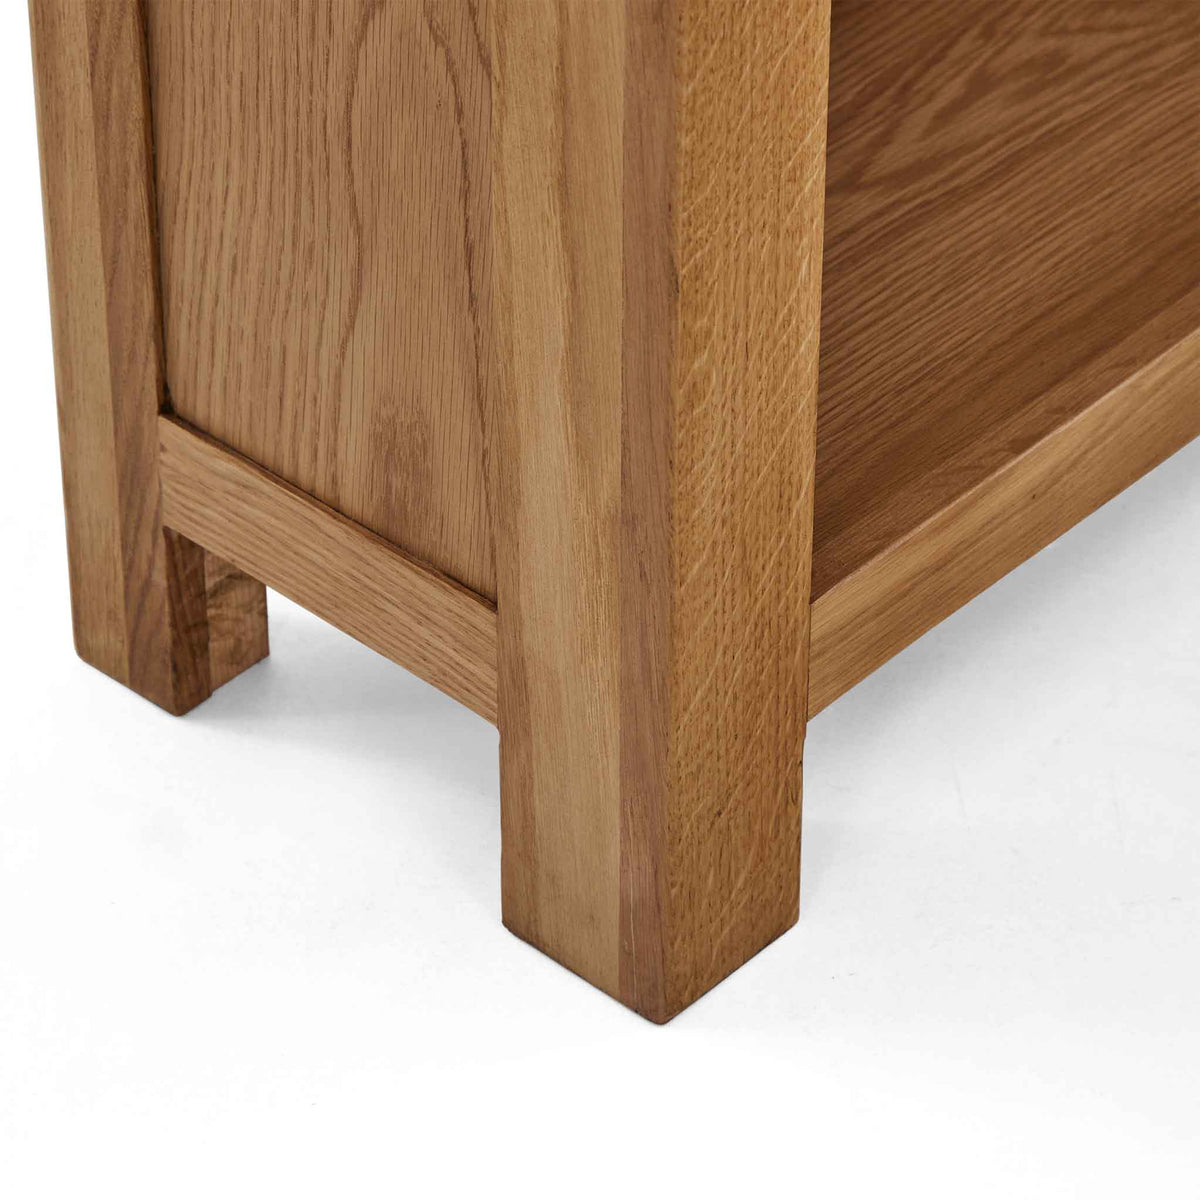 Zelah Oak Narrow Bookcase - Close up of lower shelf and feet